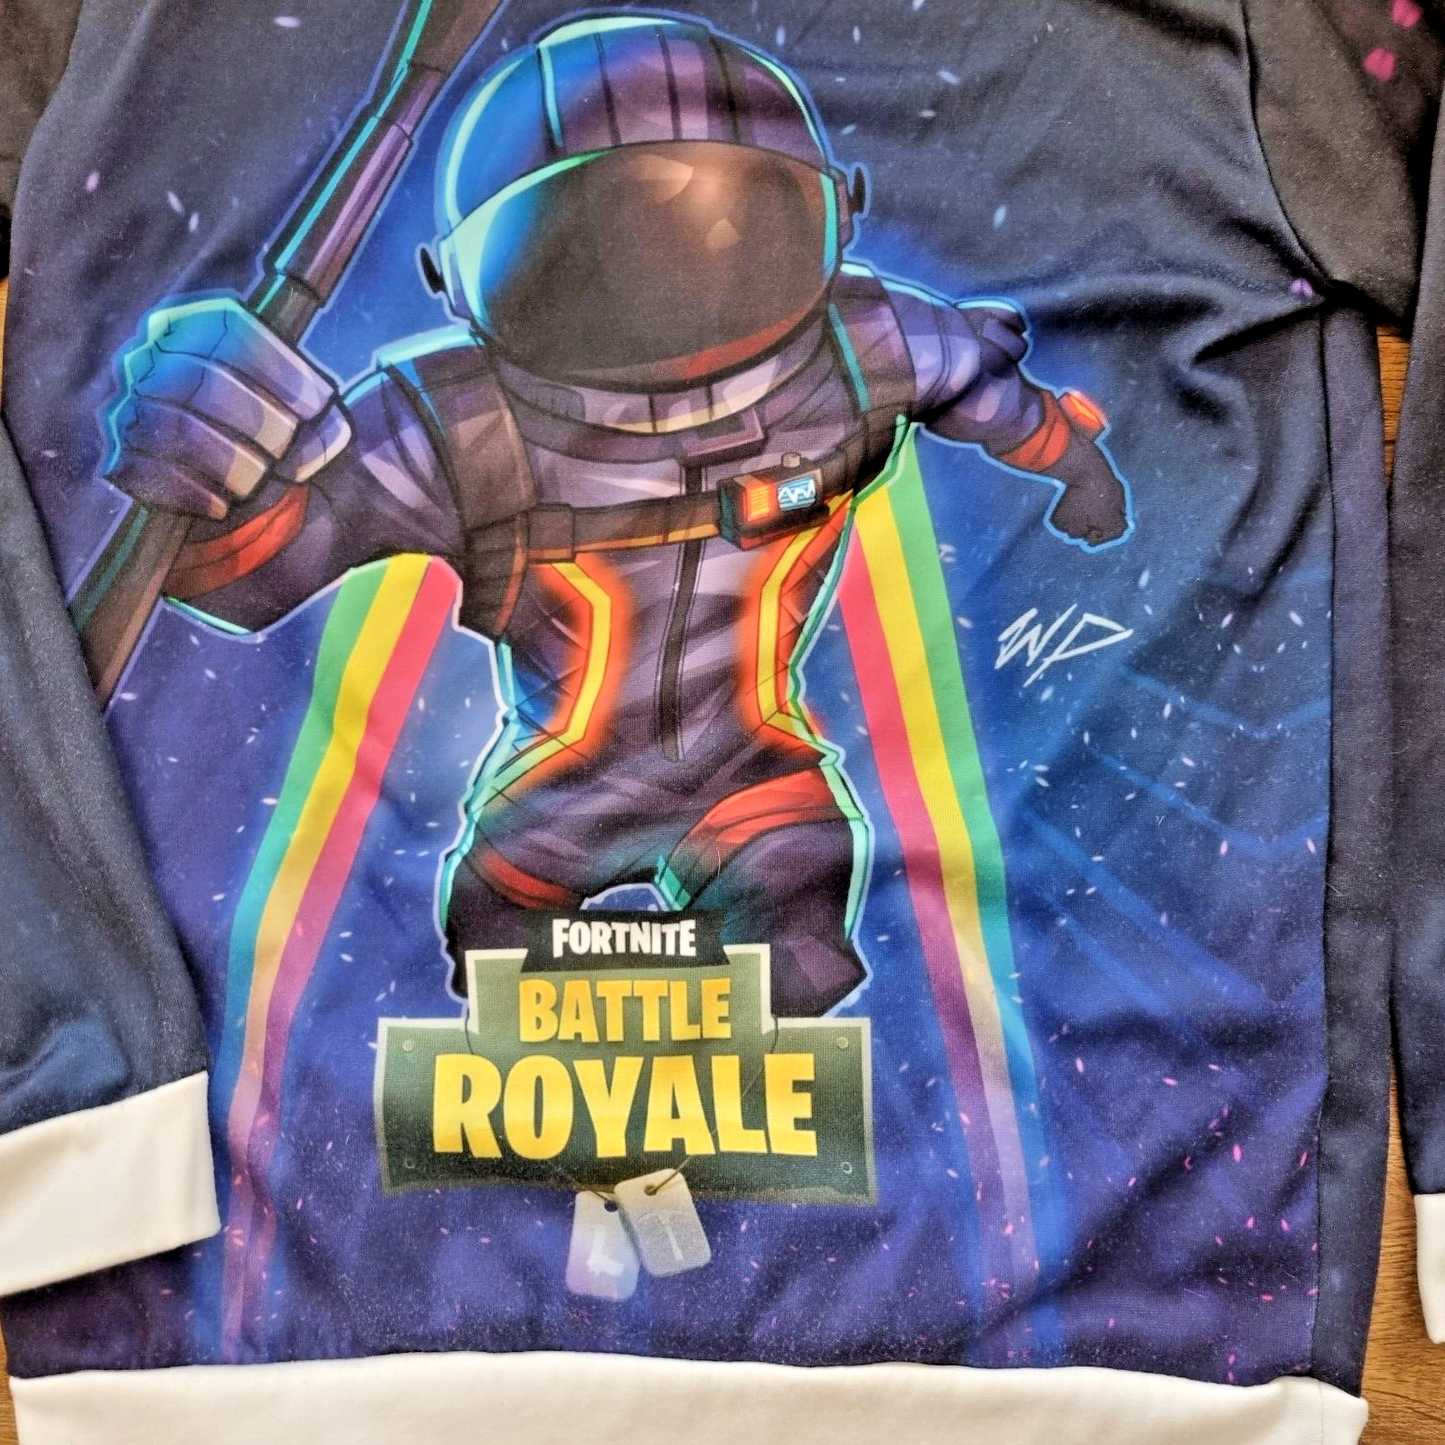 Fortnite Battle Royale Graphic Hoodie Astronaut Sweatshirt